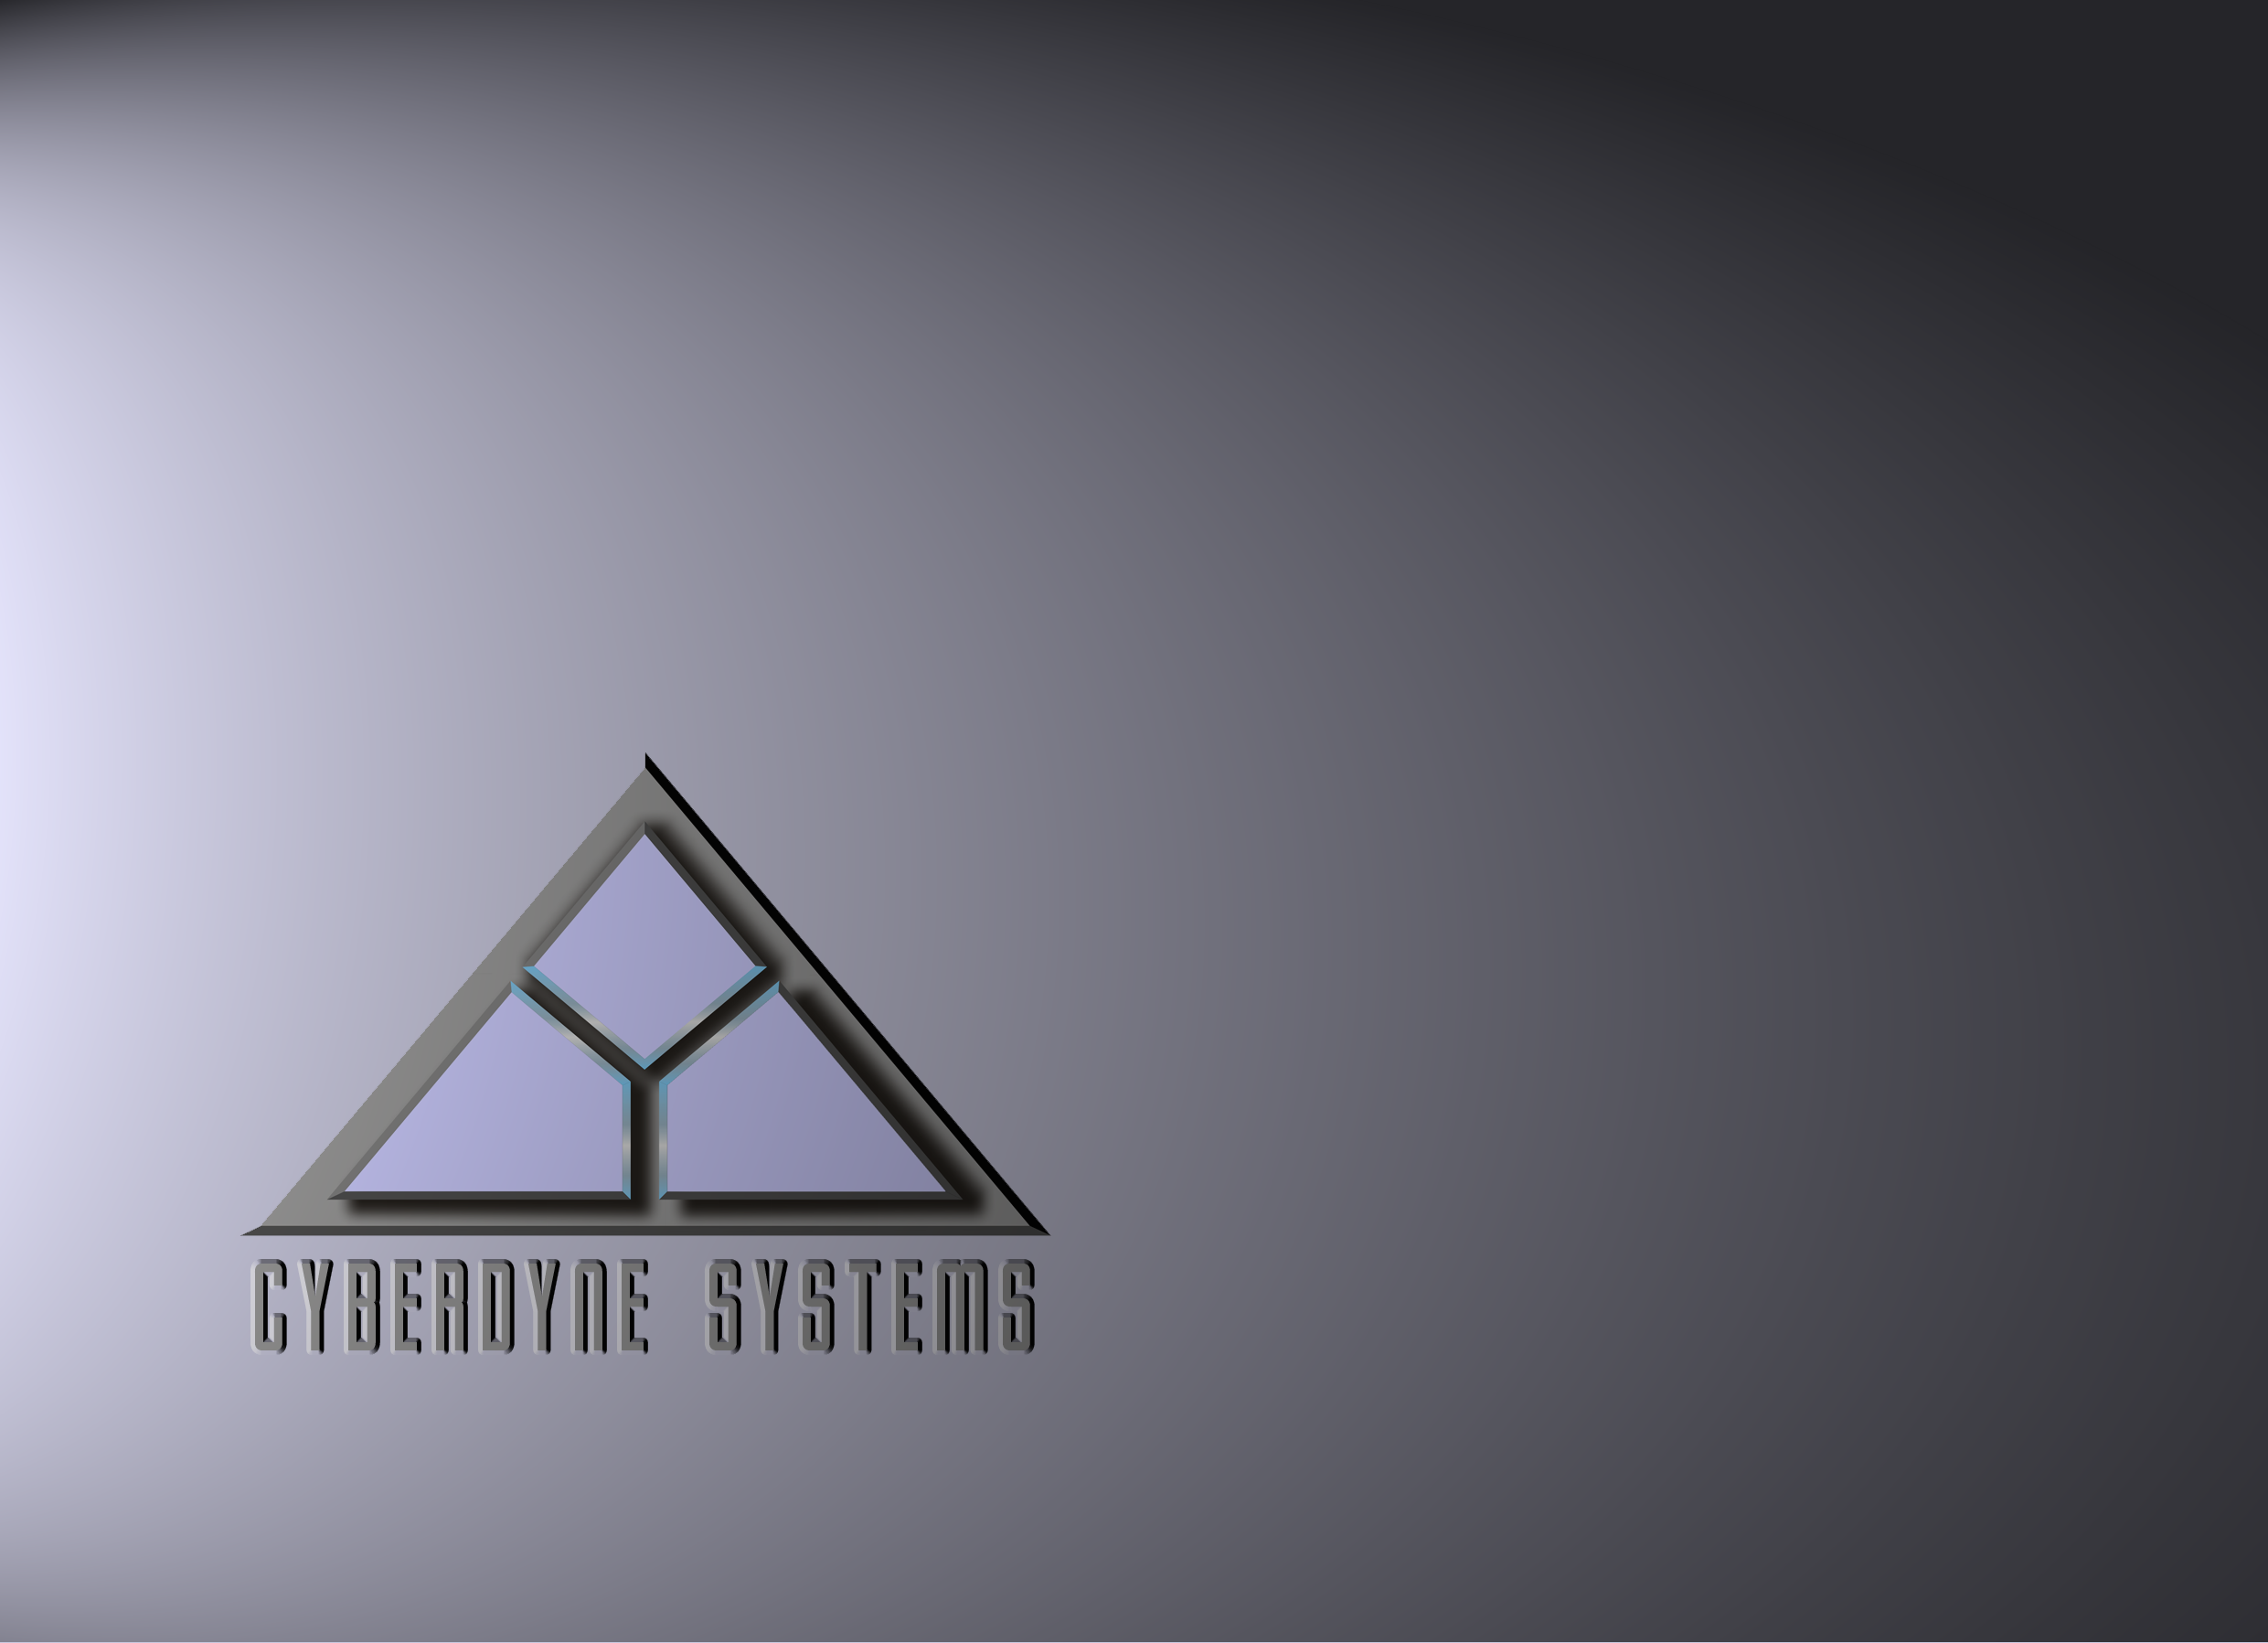 Cyberdyne Systems Skynet 2481x1797